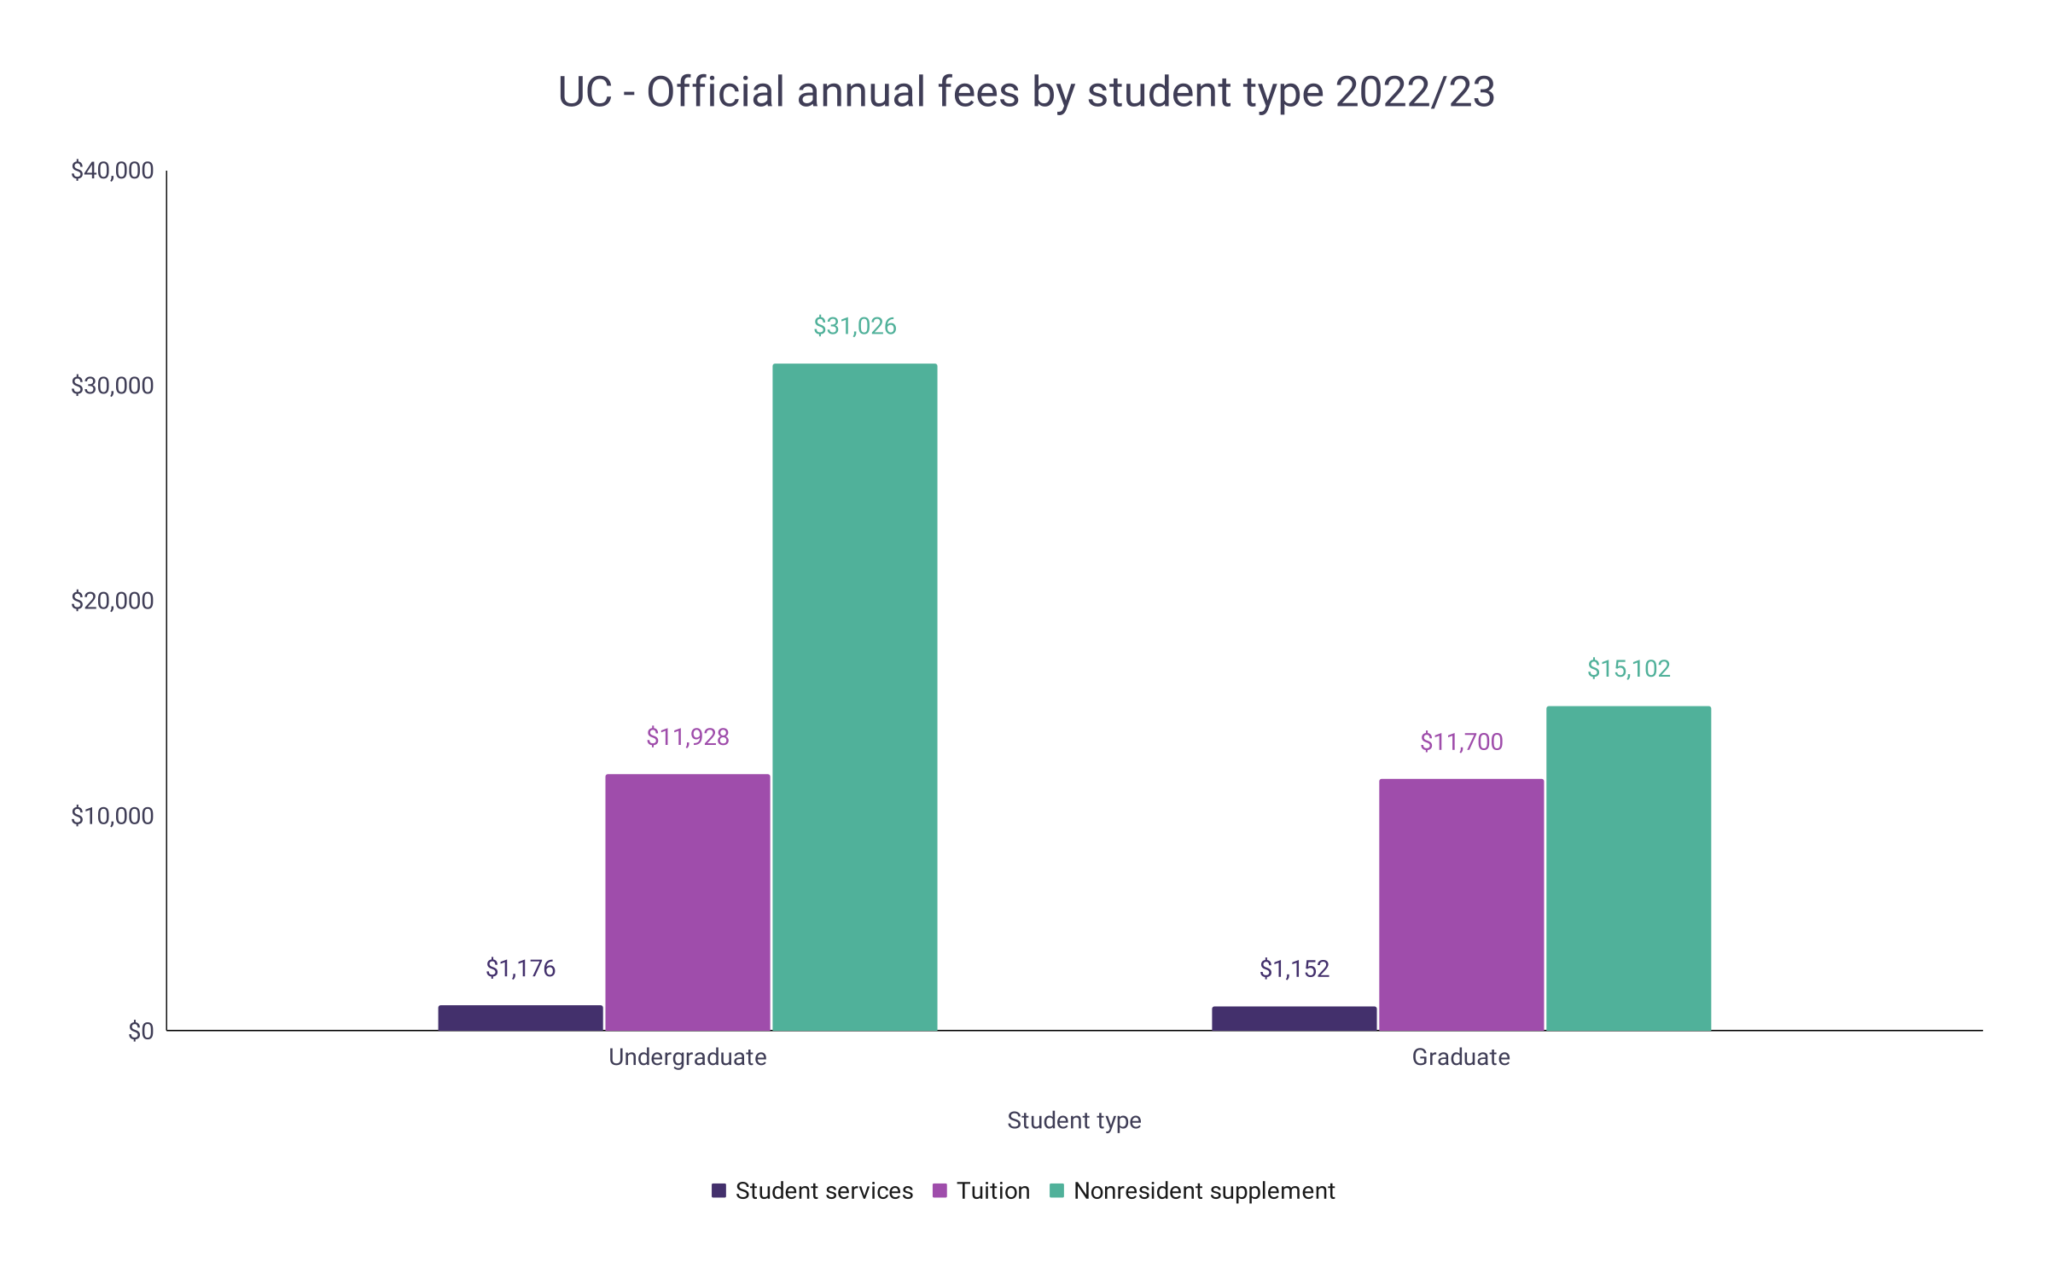 UC Merced Tuition Fee Statistics WordsRated